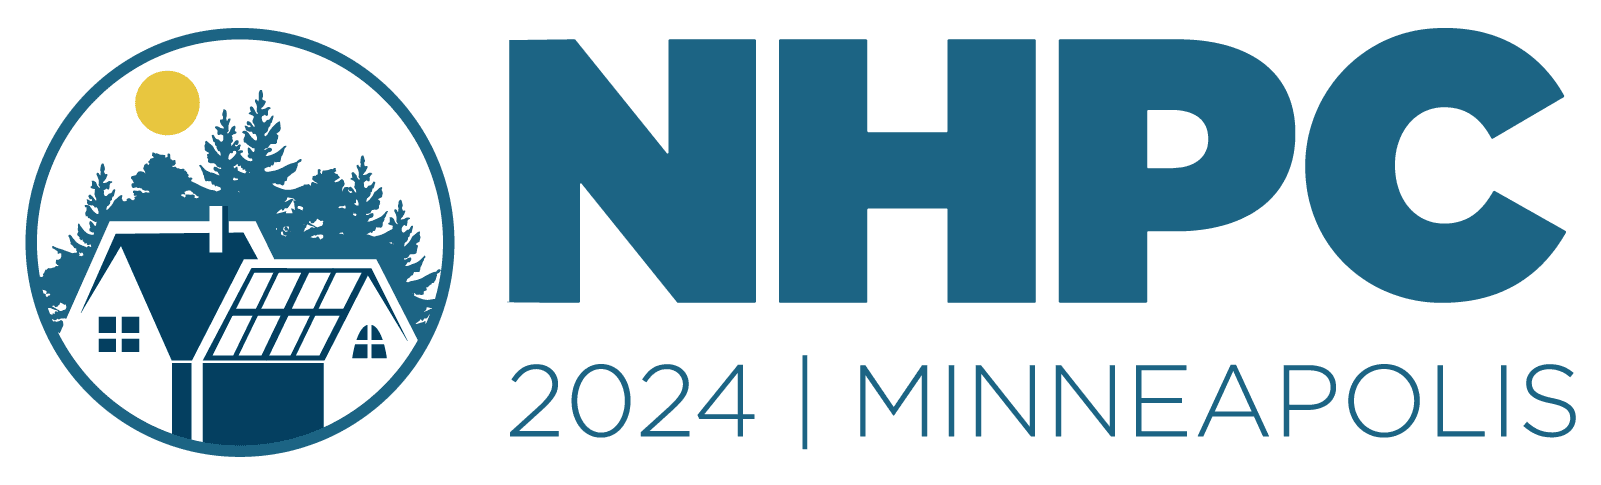 National Home Performance Conference (NHPC) 2024 Minneapolis logo